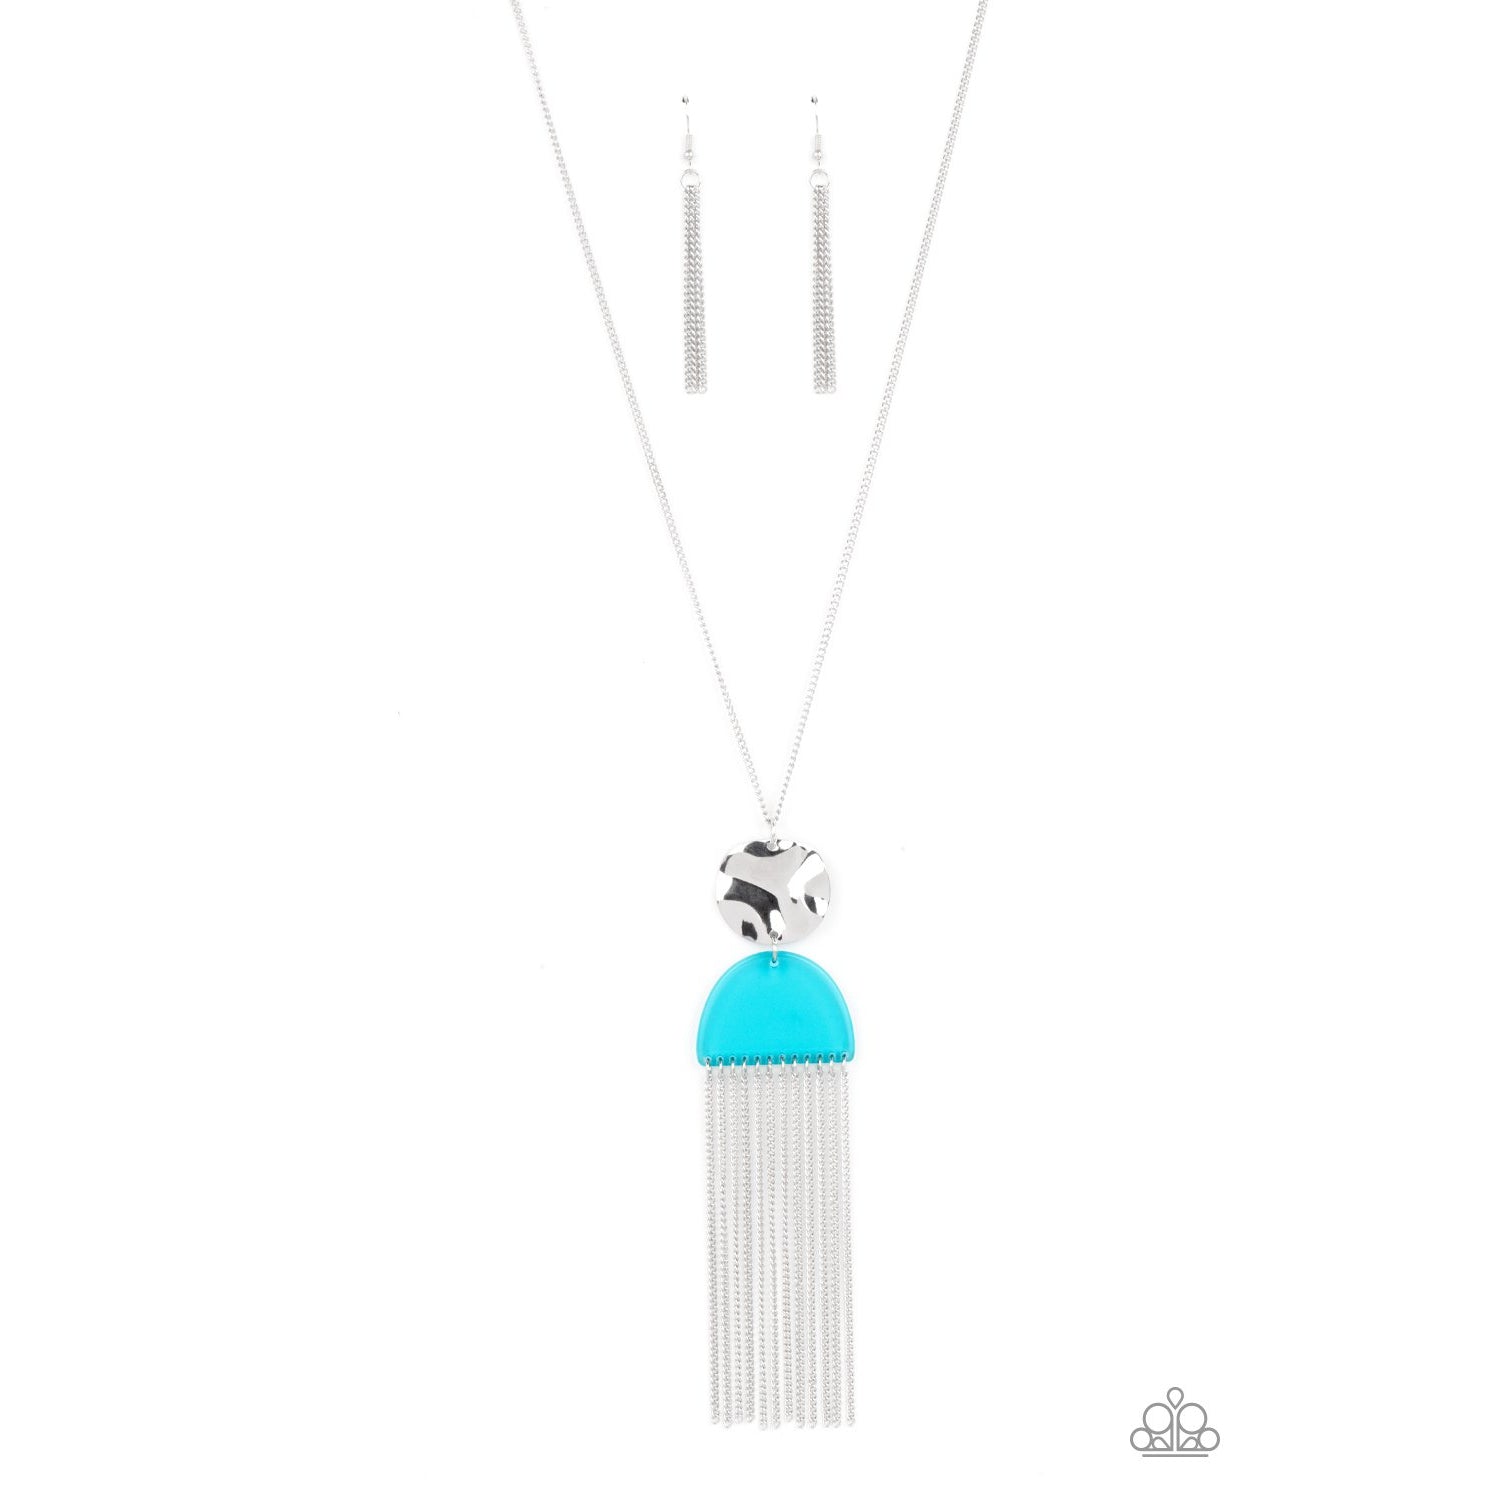 Color Me Neon - Blue Necklace - Paparazzi Accessories - GlaMarous Titi Jewels